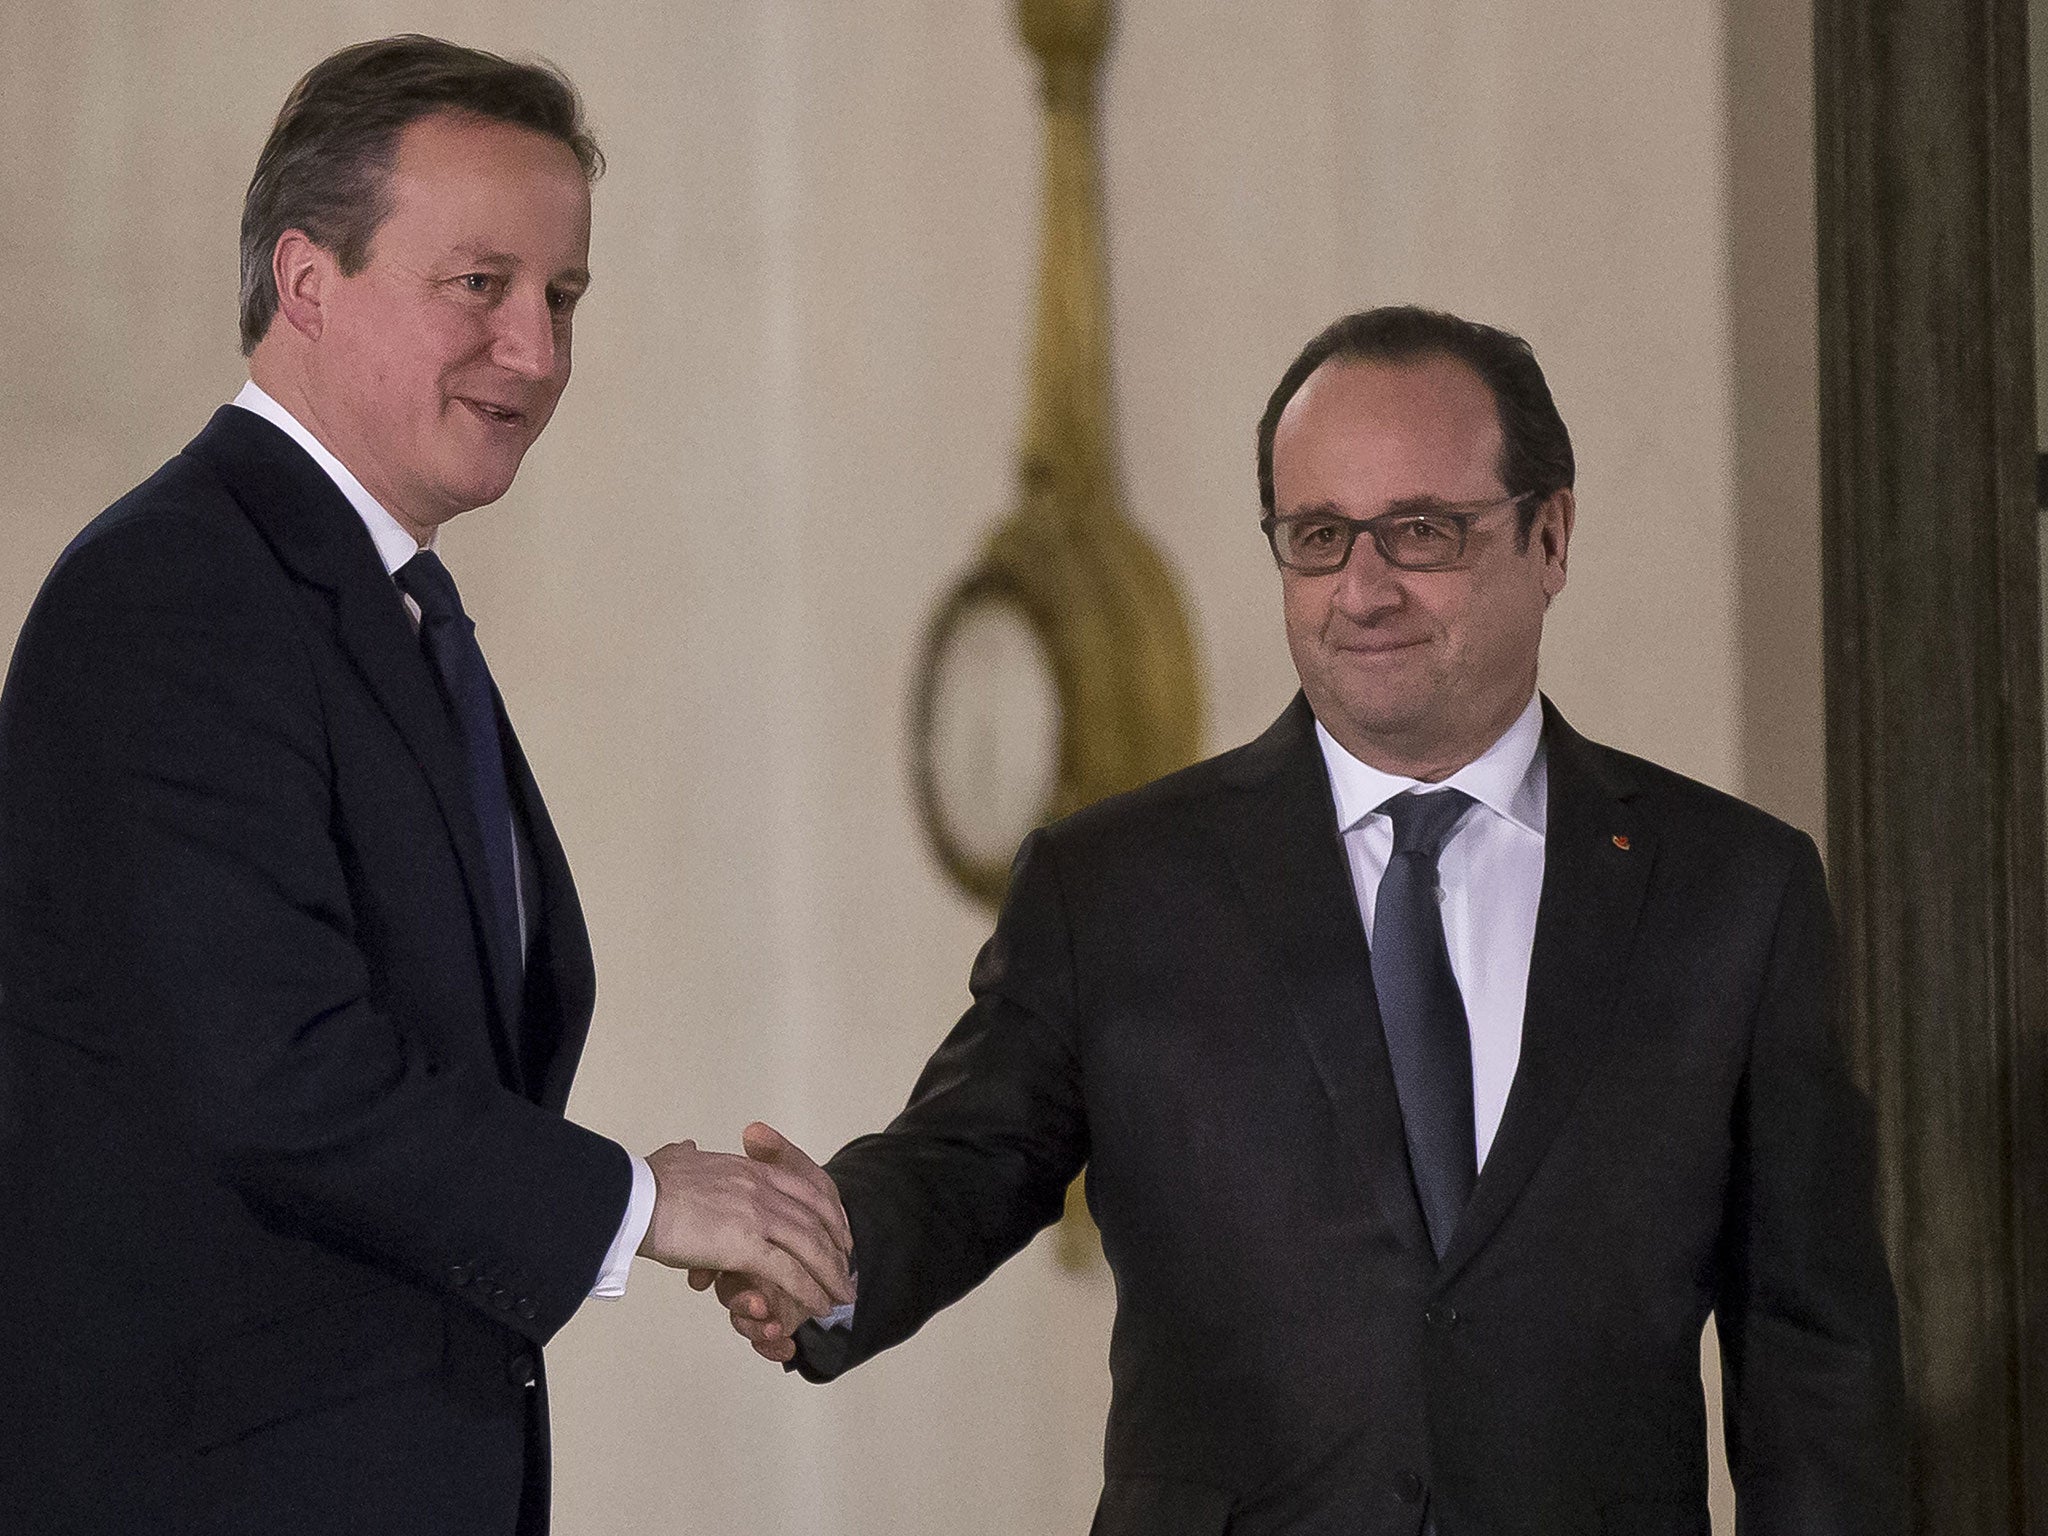 Downing Street said Mr Cameron and Mr Hollande had made 'good progress'